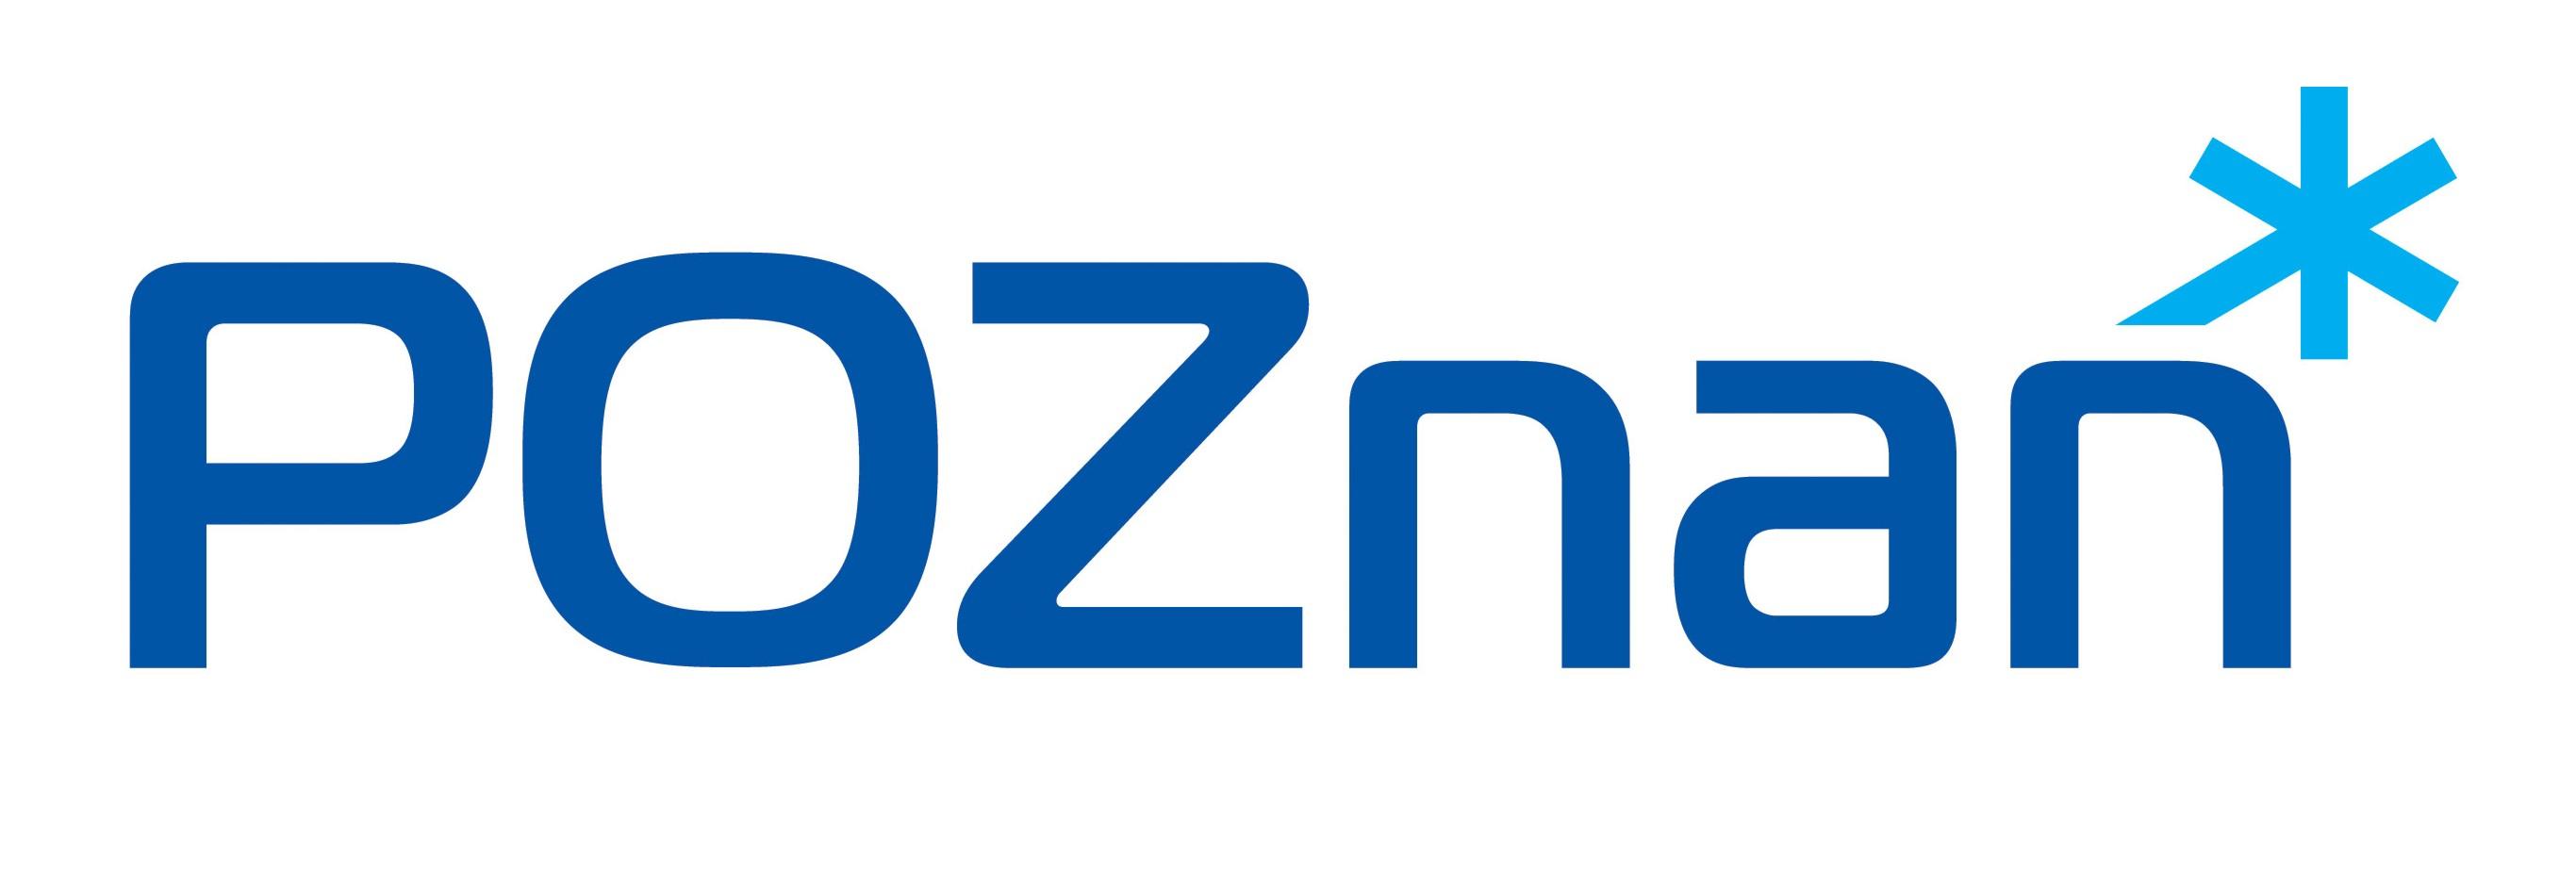 Miasto Poznań logo